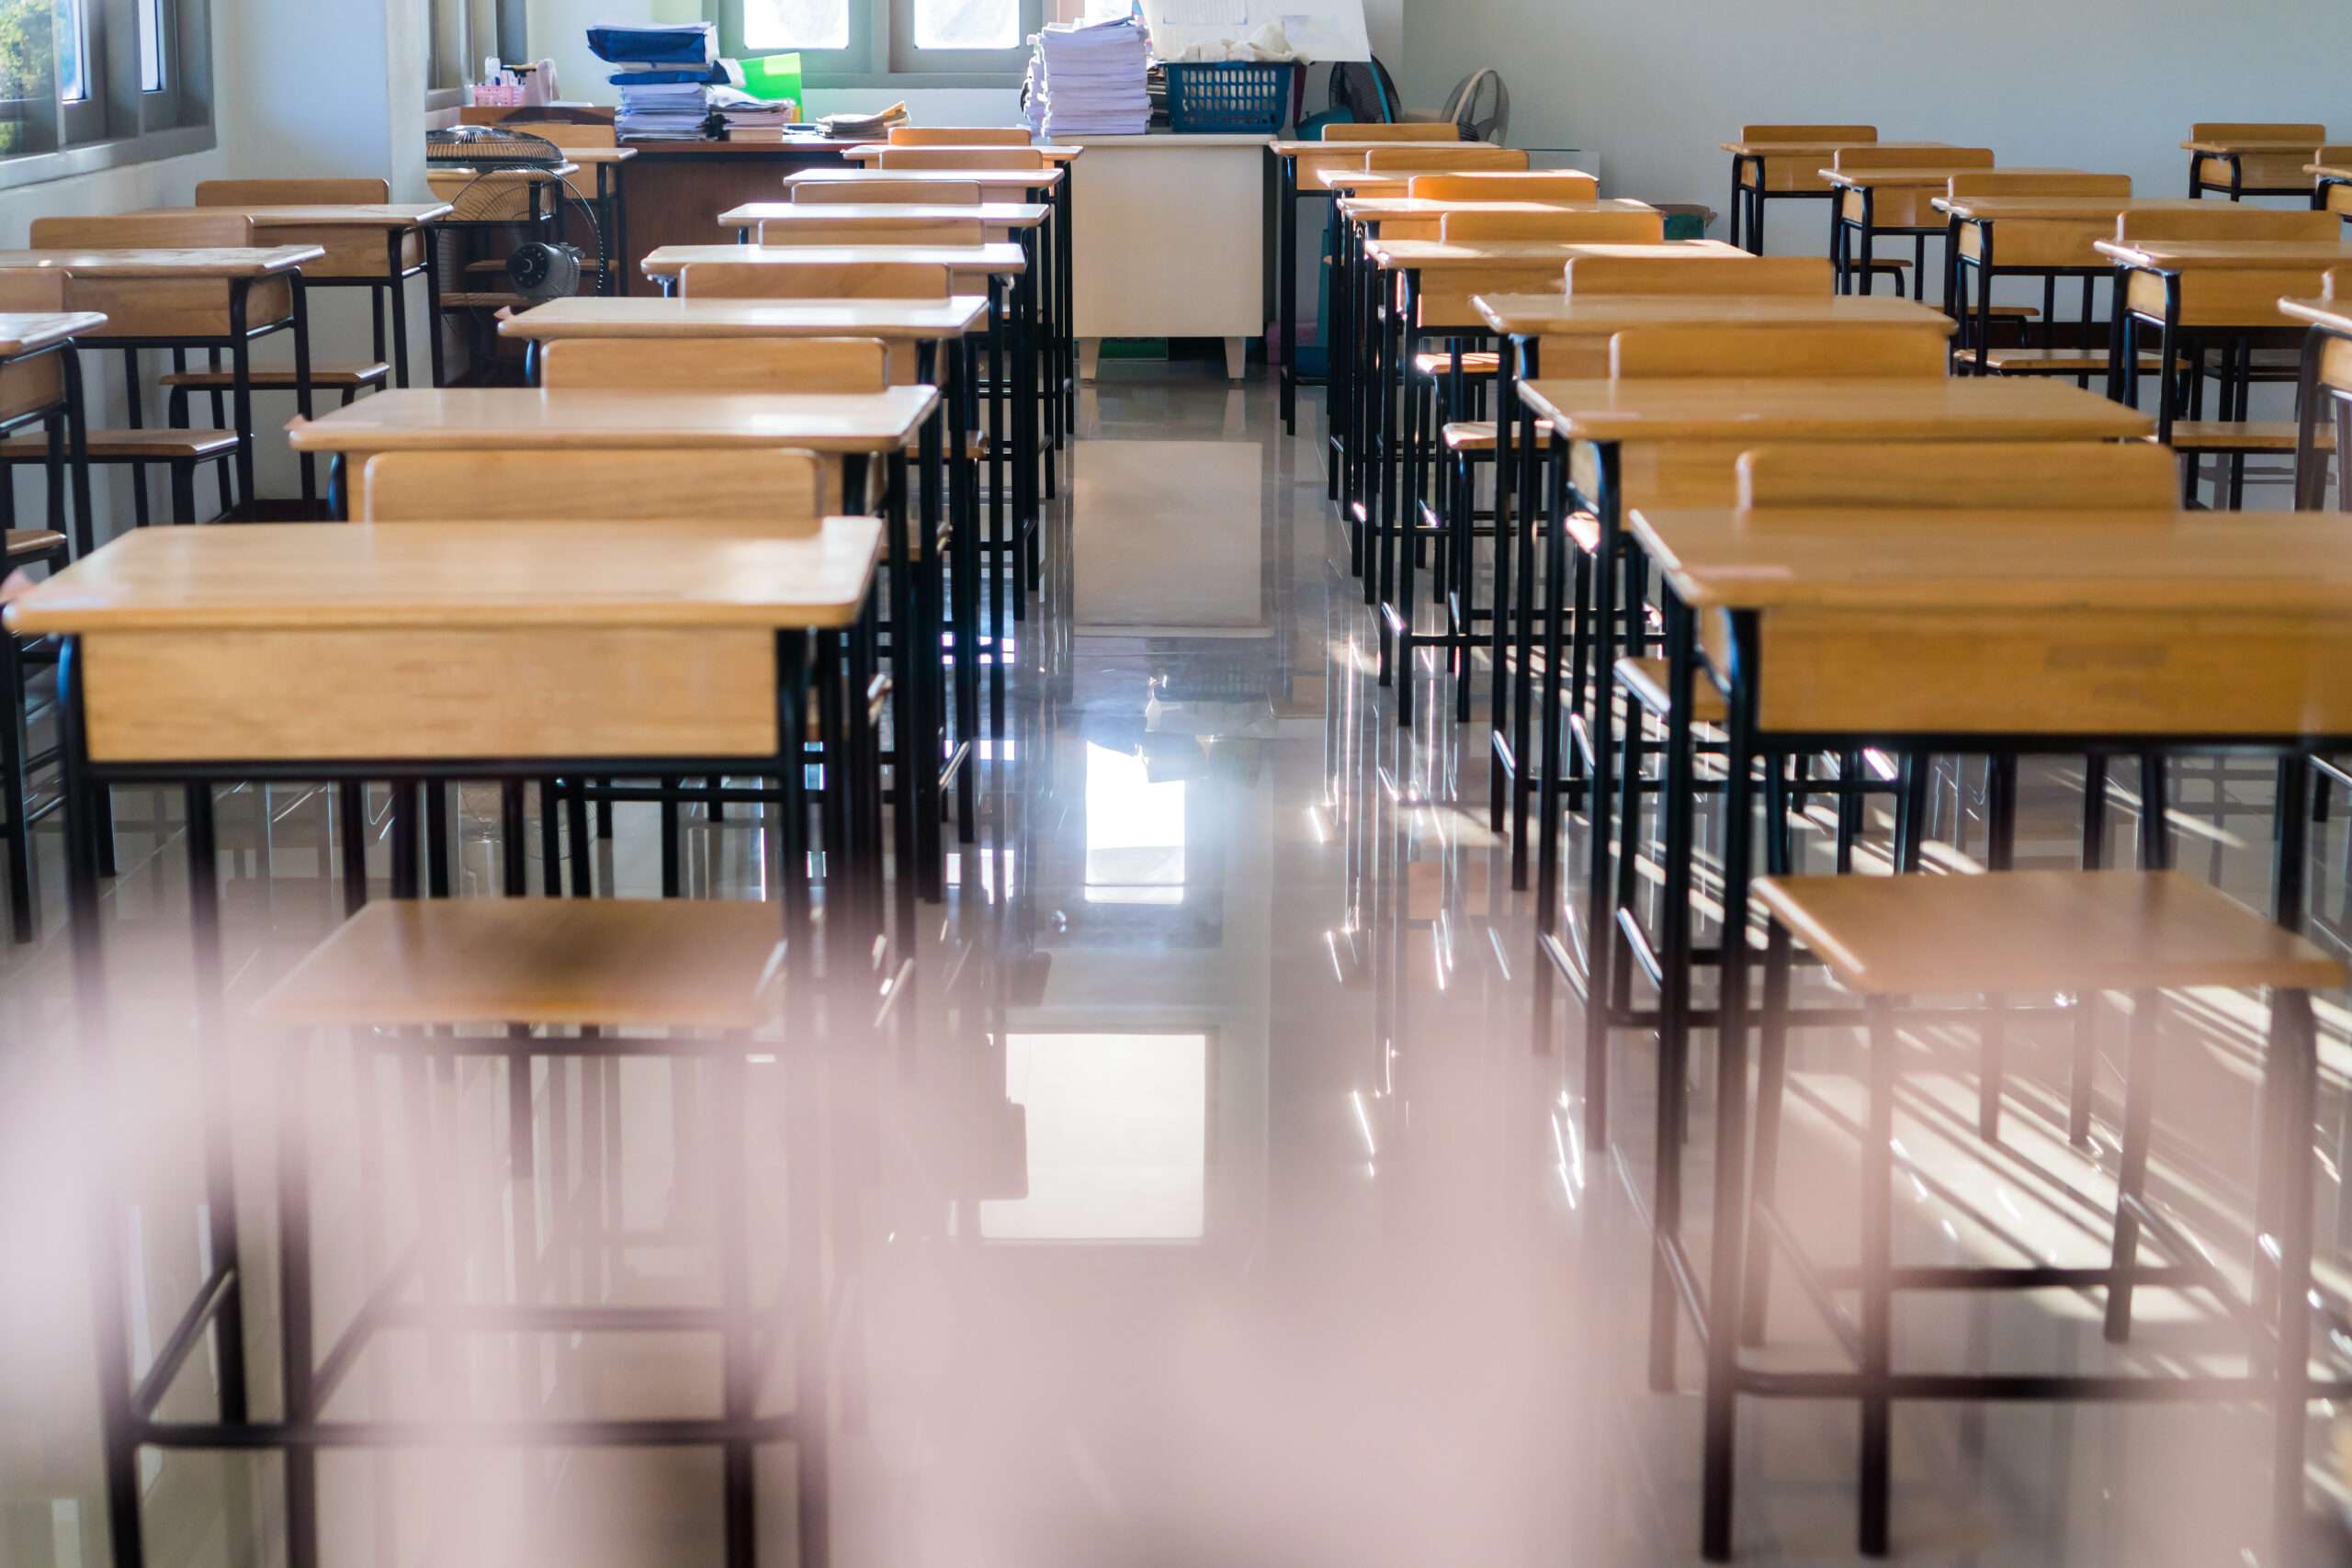 Improve retention and recruitment to address teacher shortage, Kentucky school leaders say